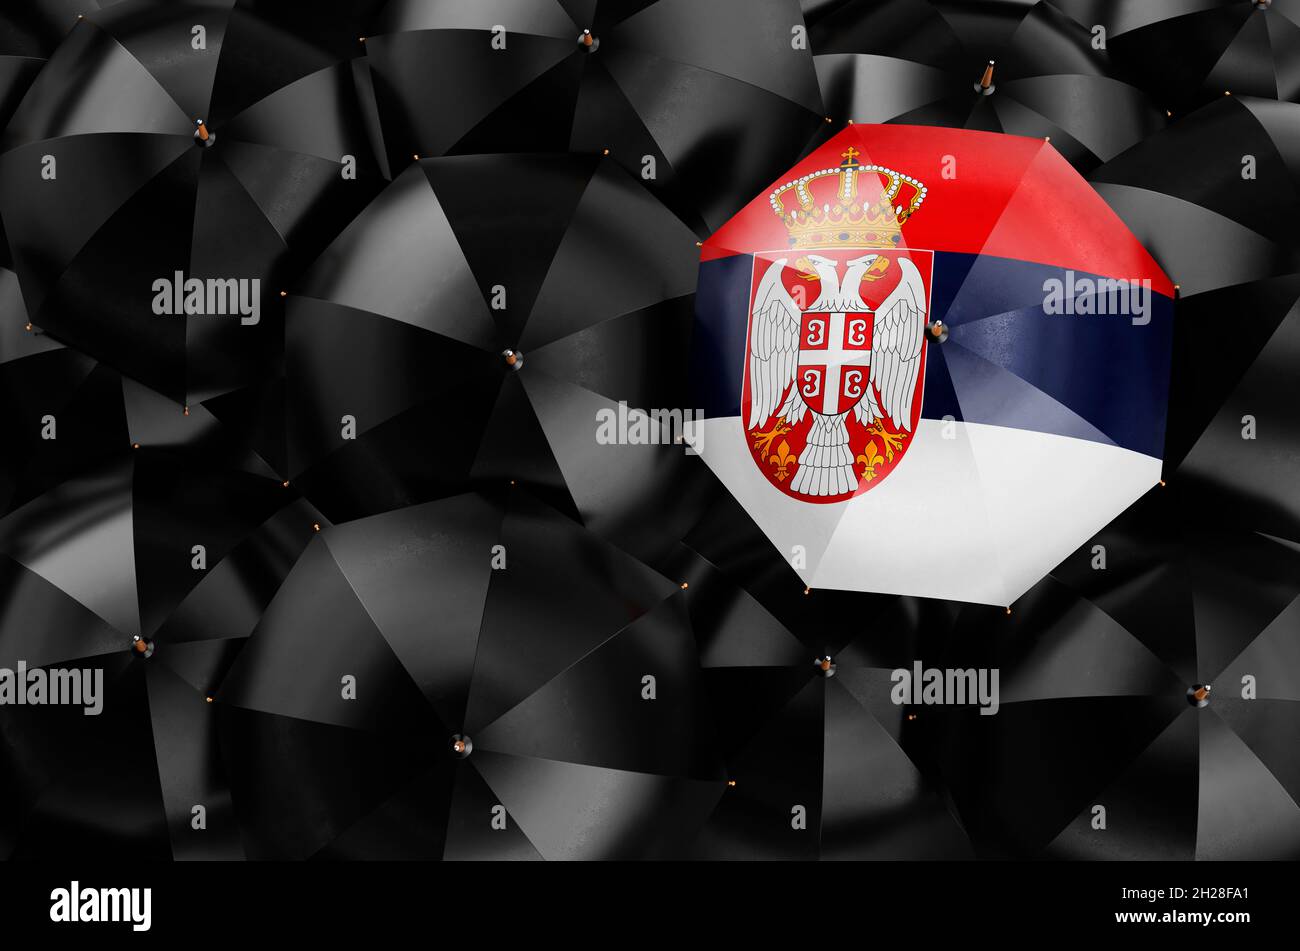 Umbrella with Serbian flag among black umbrellas, top view. 3D rendering Stock Photo